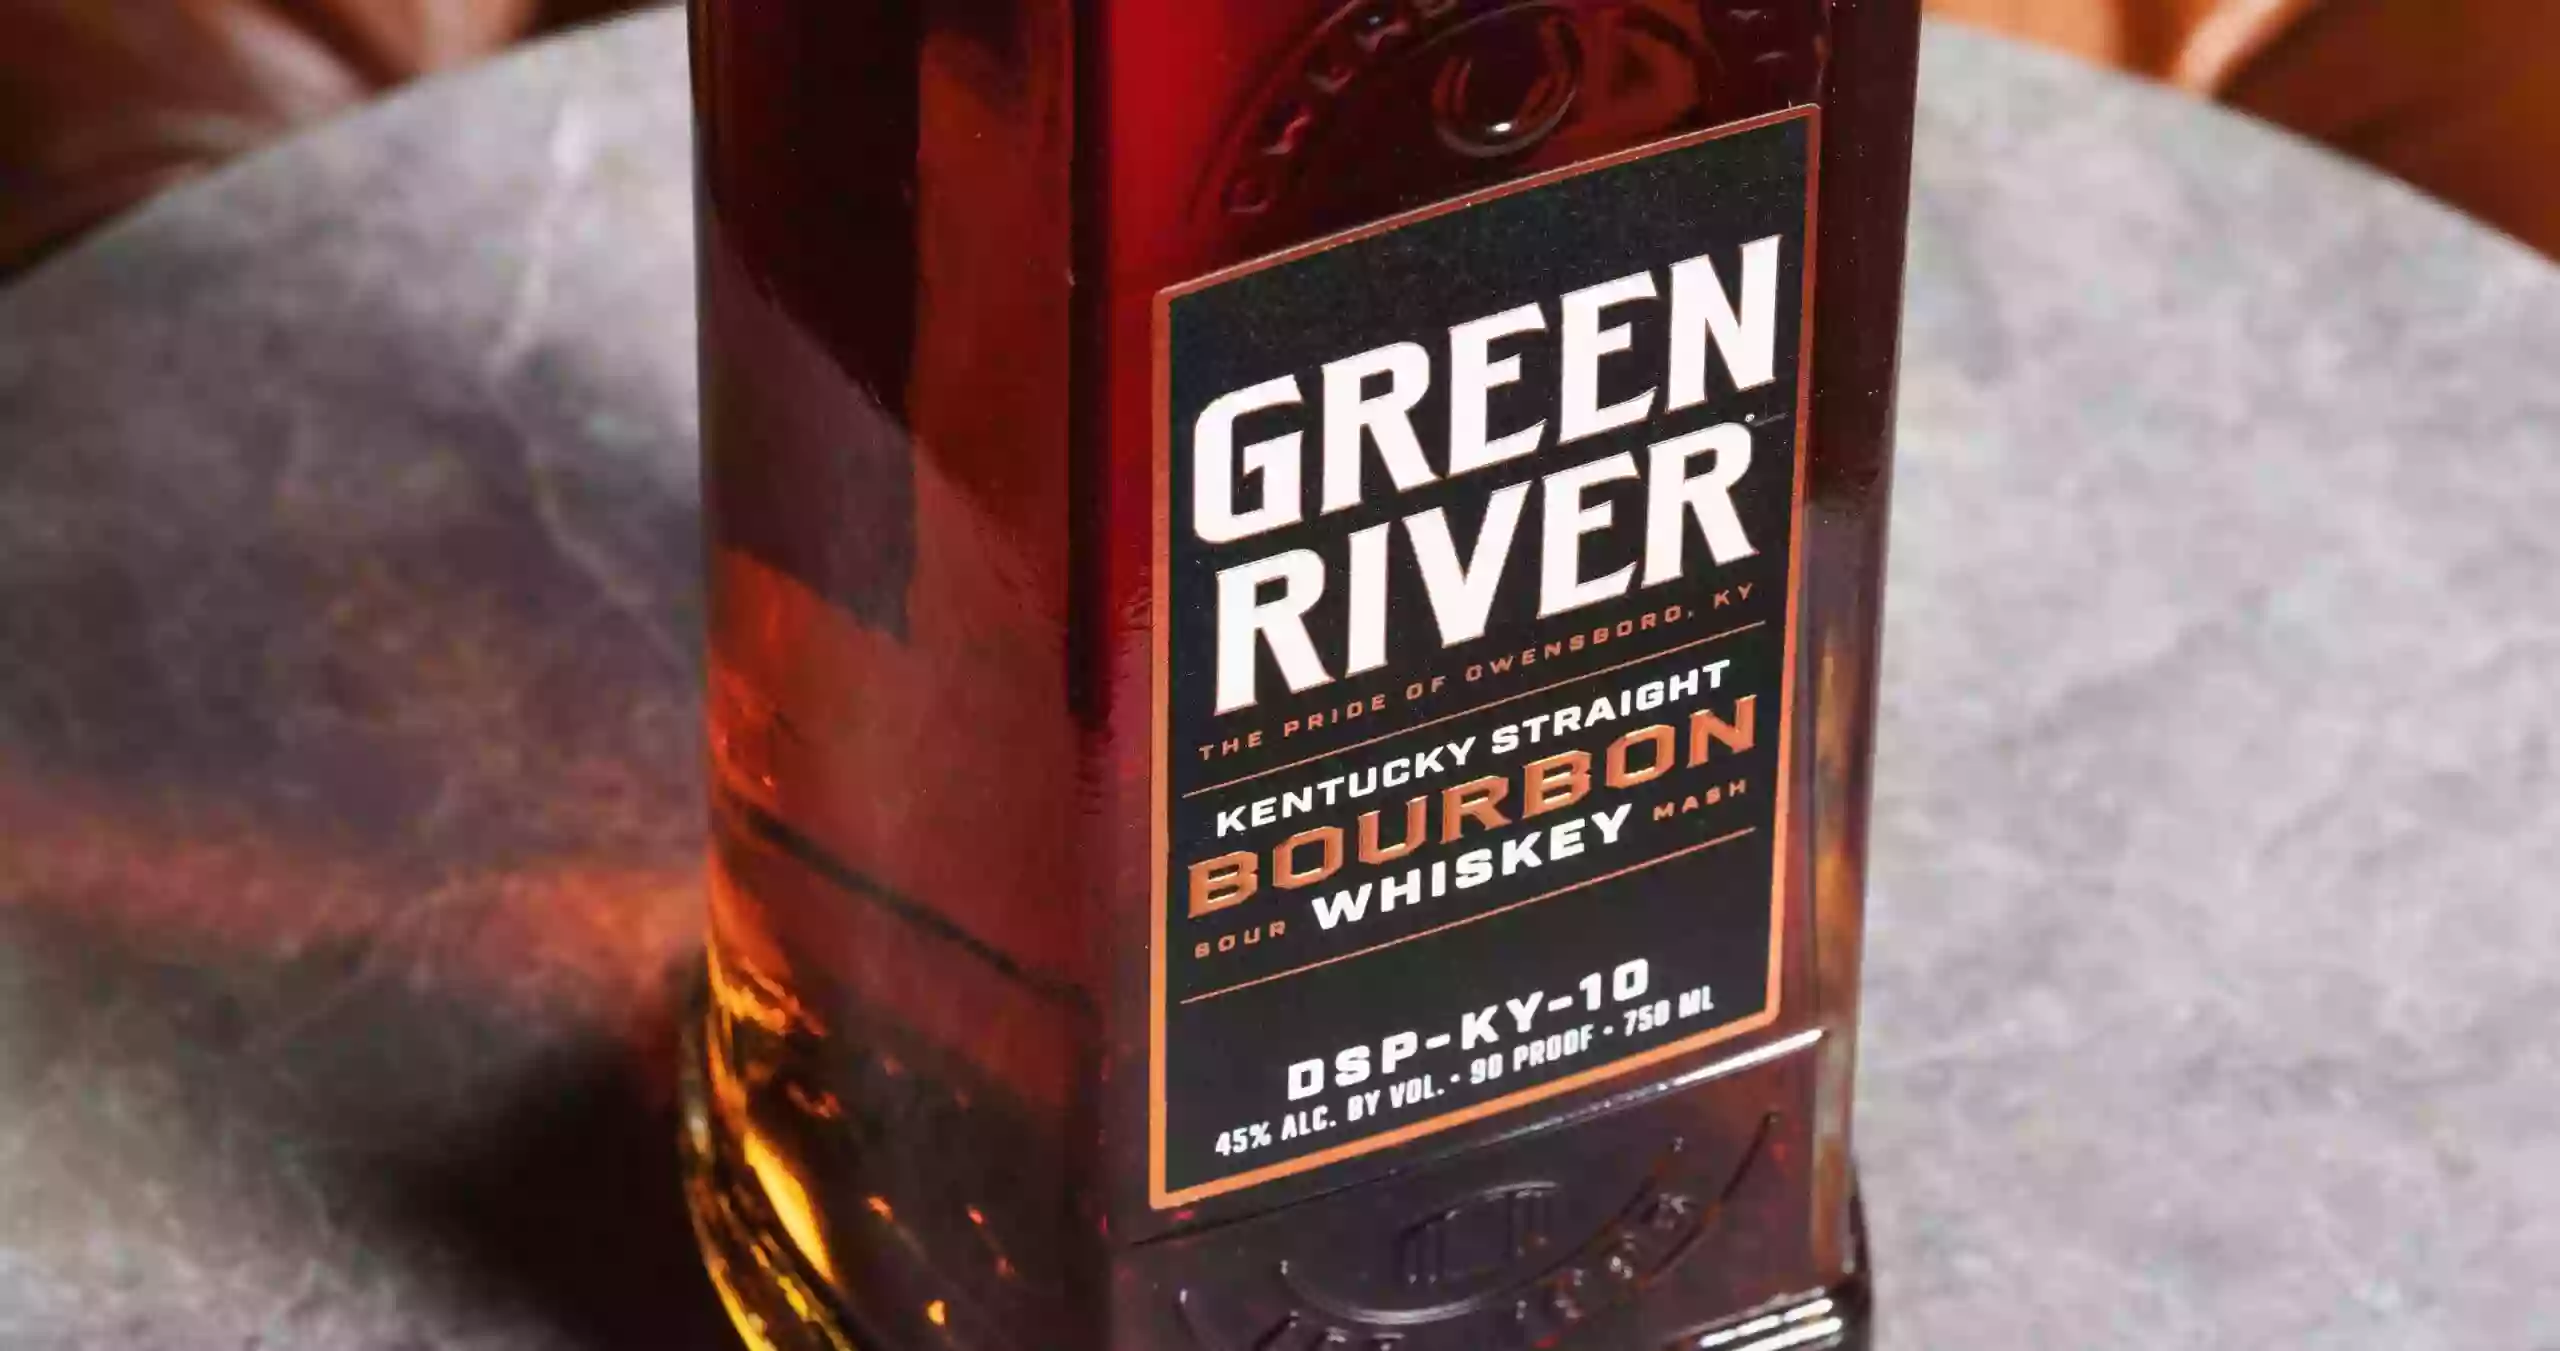 Green River Distilling Co. Gift Shop